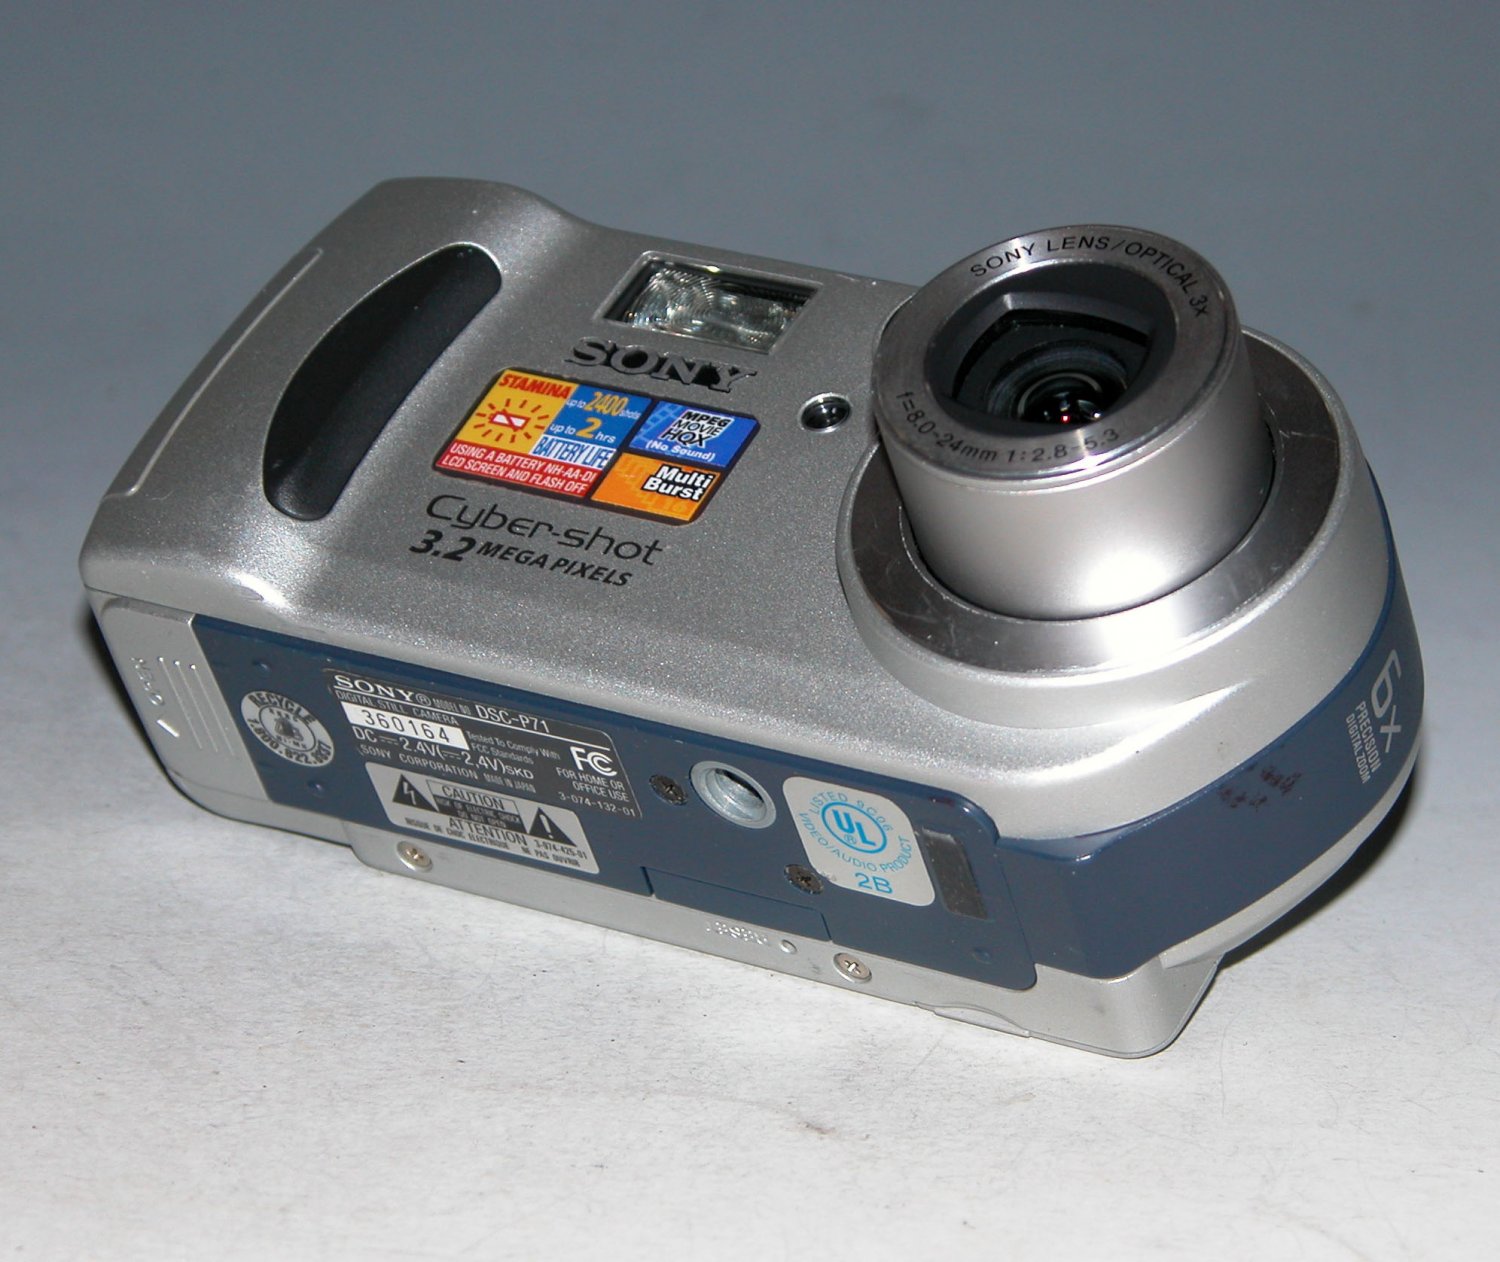 Sony Cyber-shot DSC-P71 3.2MP Digital Camera #0164